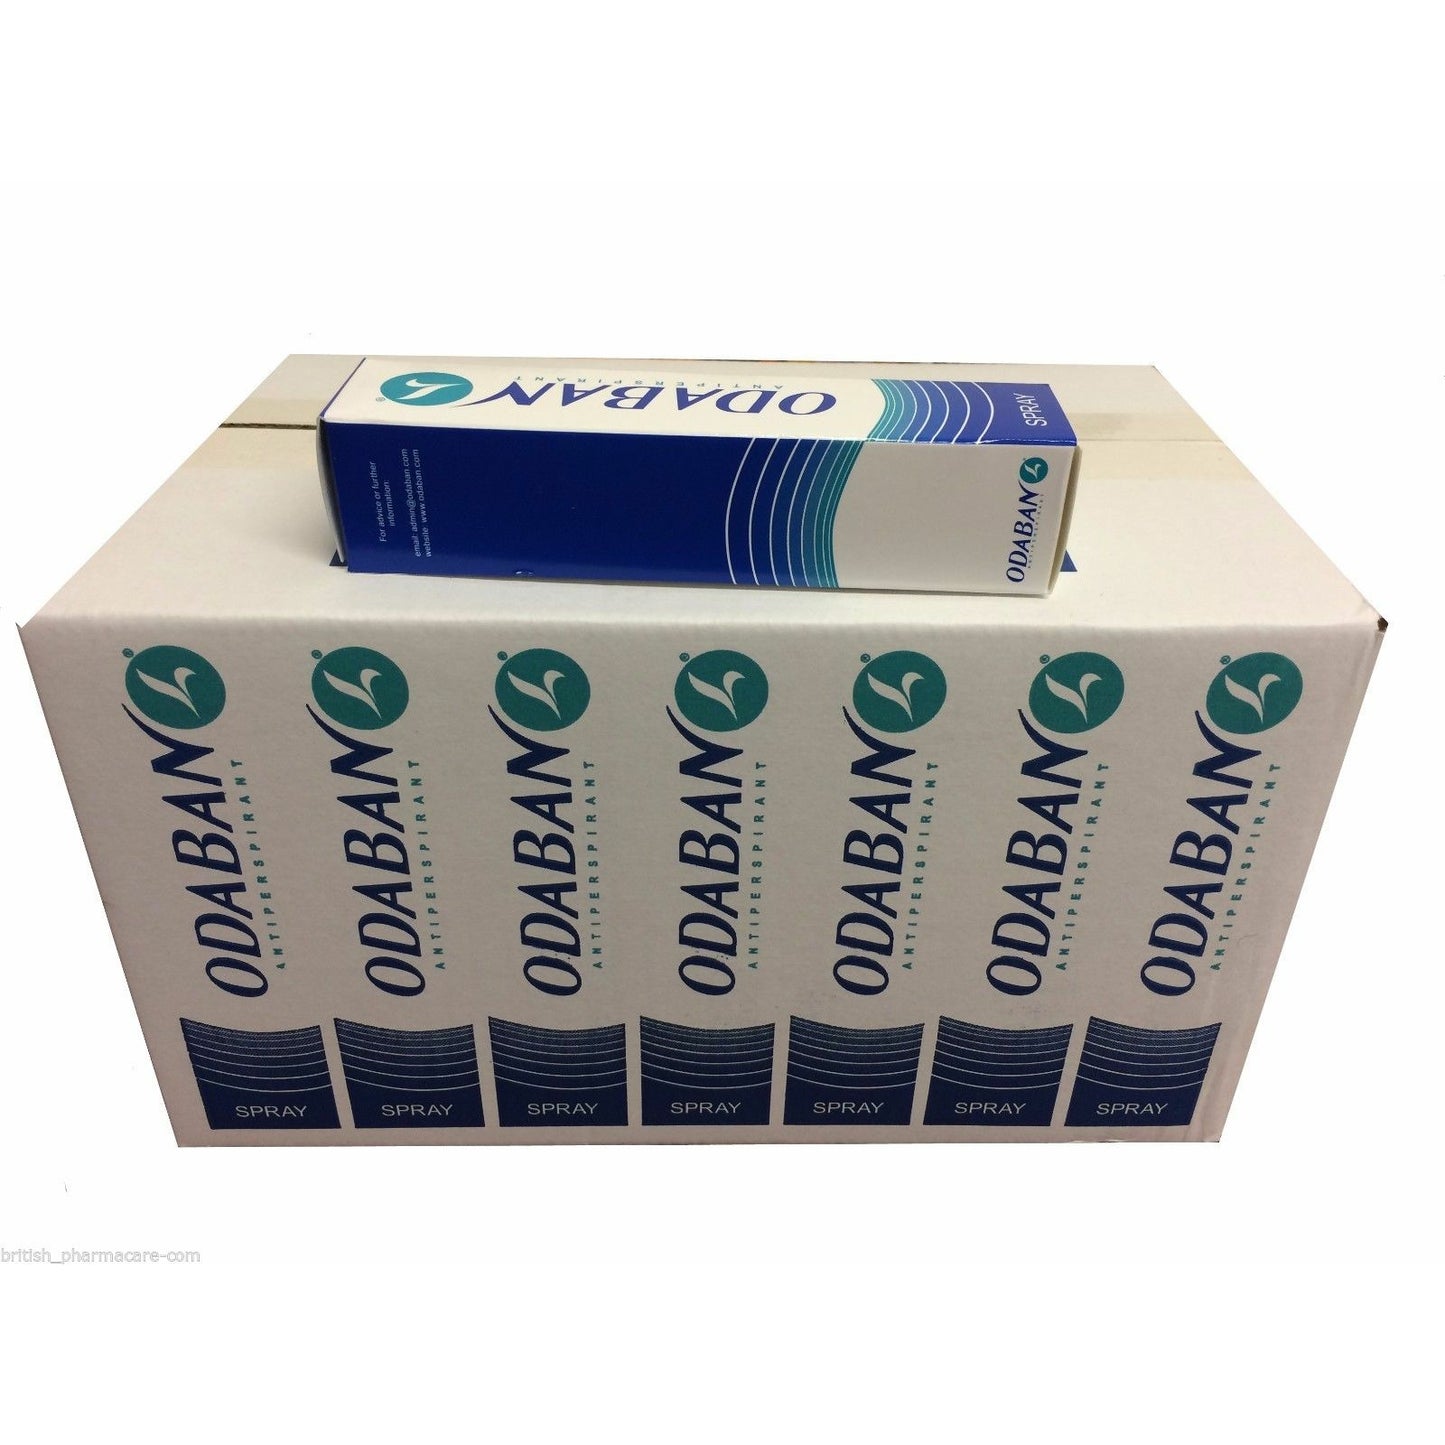 ODABAN 30ml Antiperspirant BOX OF 30